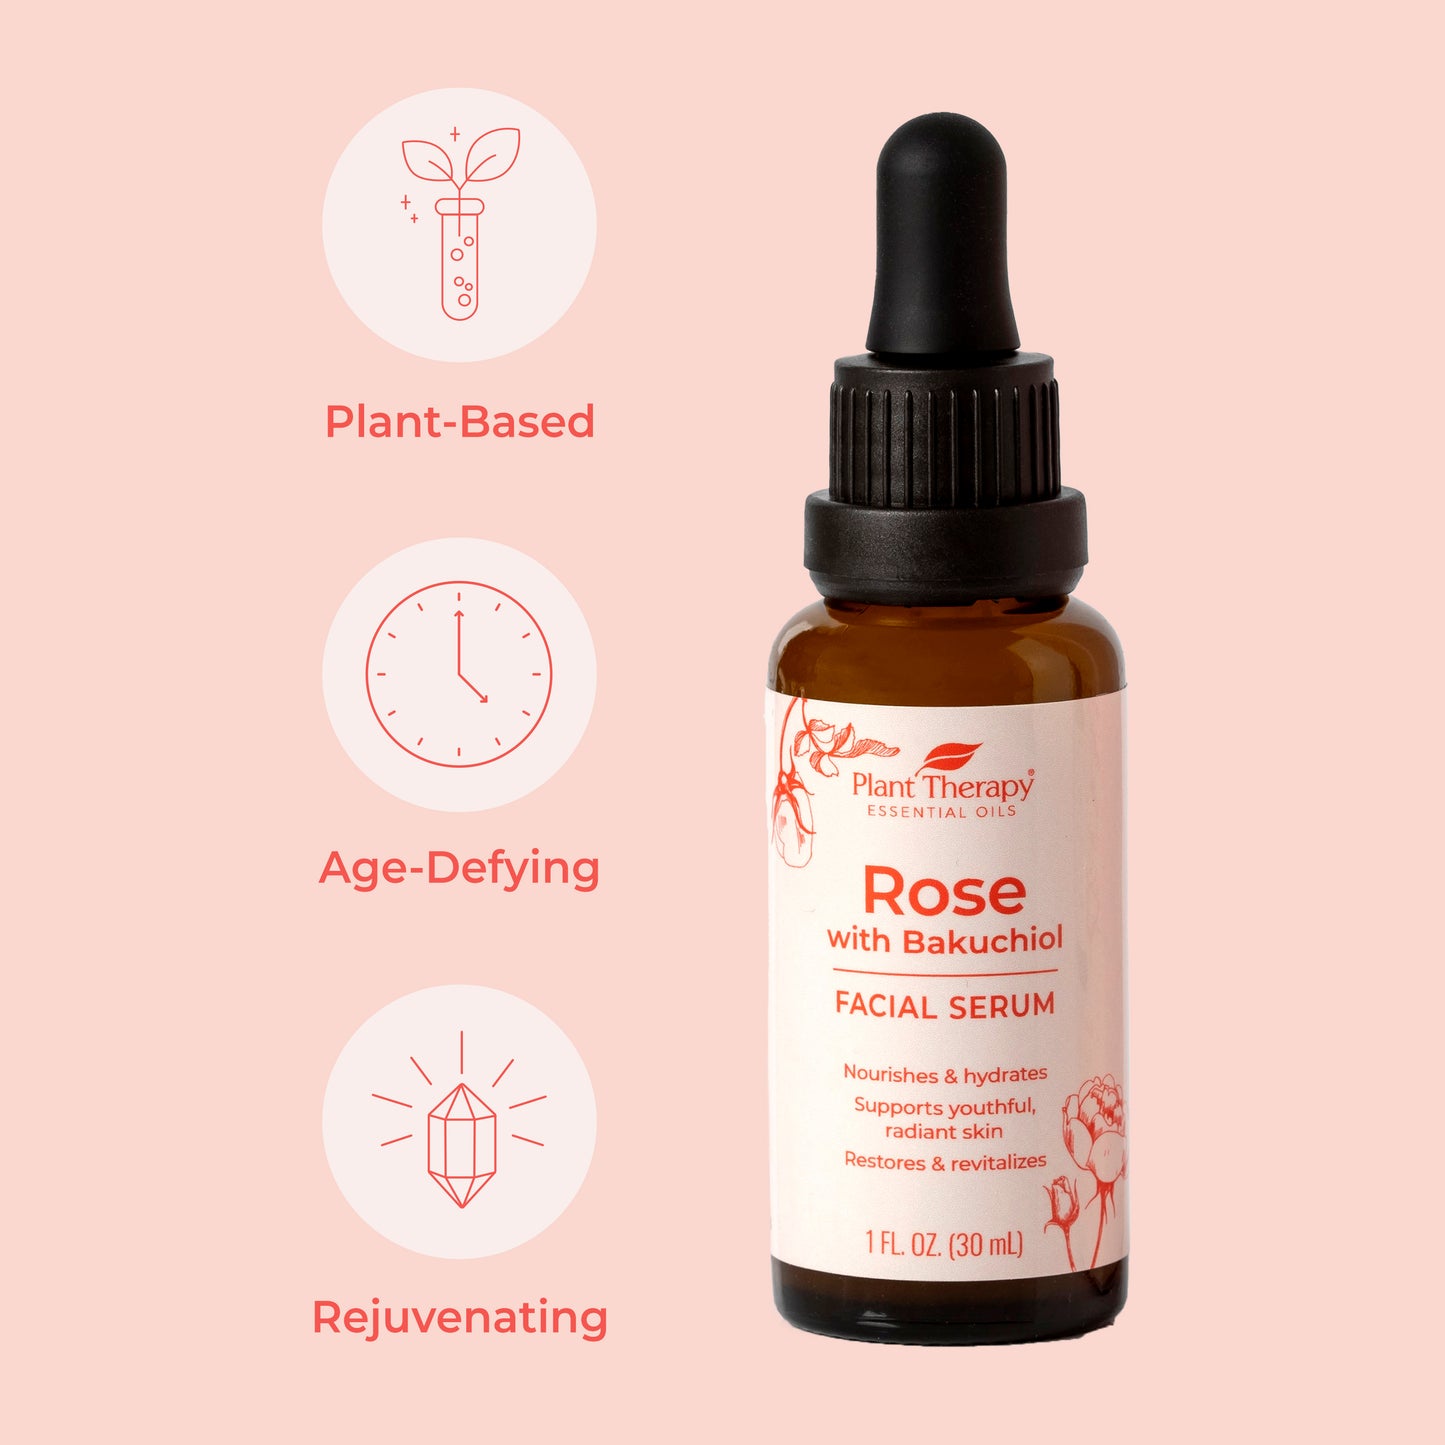 Rose Facial Serum benefits - plant based, age defying, rejuvinating